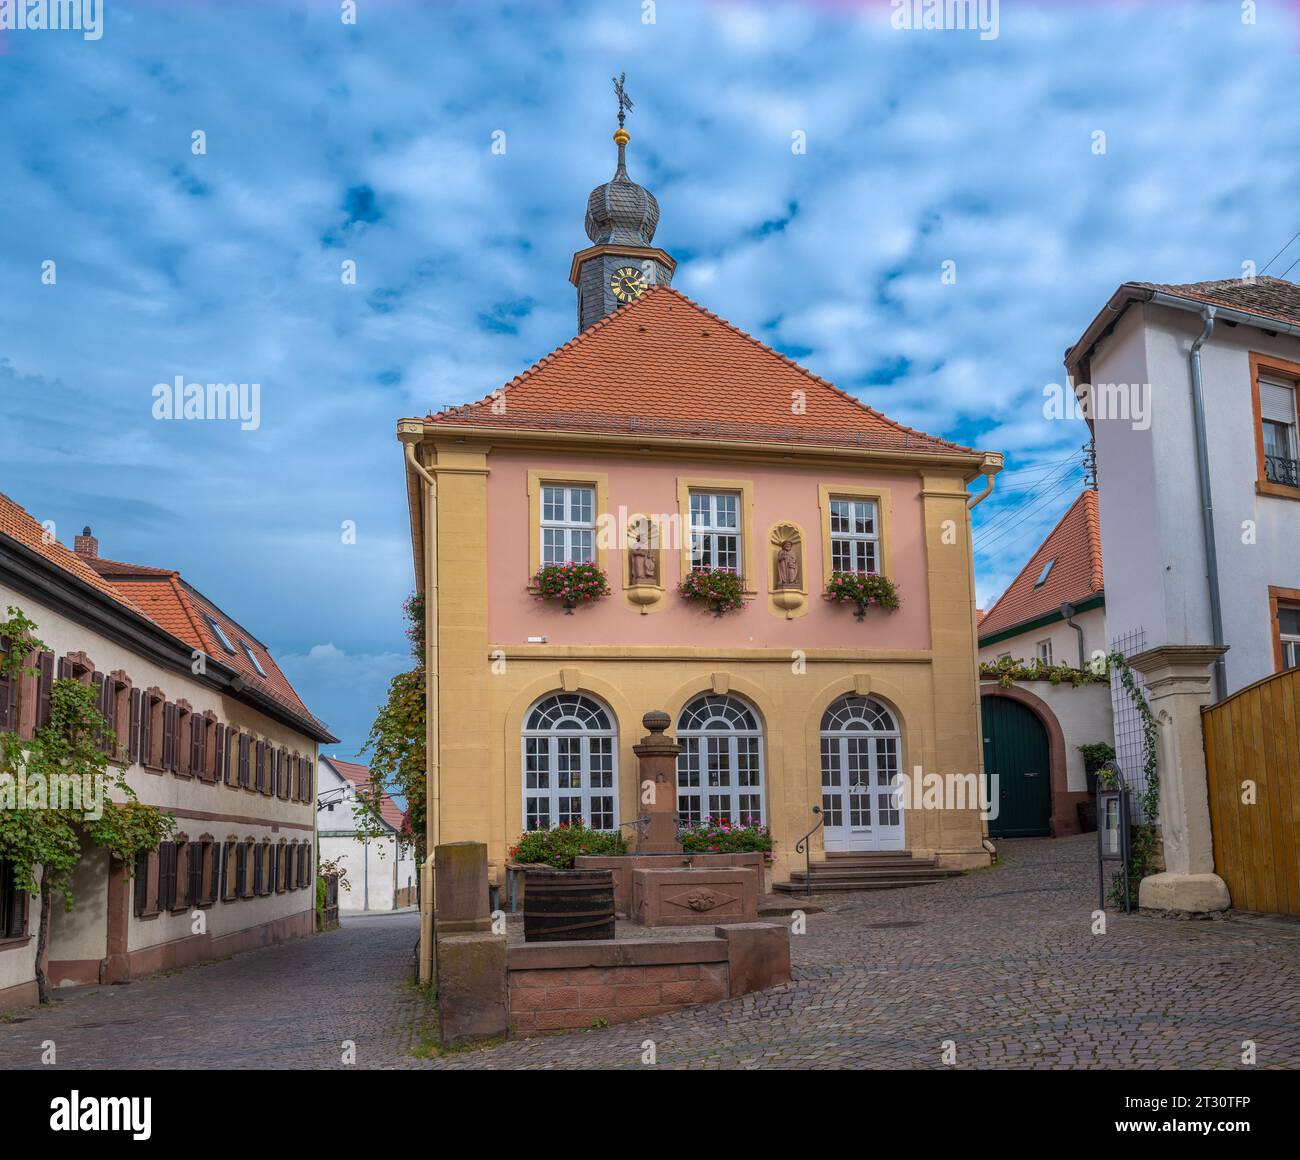 Old town hall in Hambach, Neustadt an der Weinstraße, Rhineland-Palatinate, Germany, Europe Stock Photo